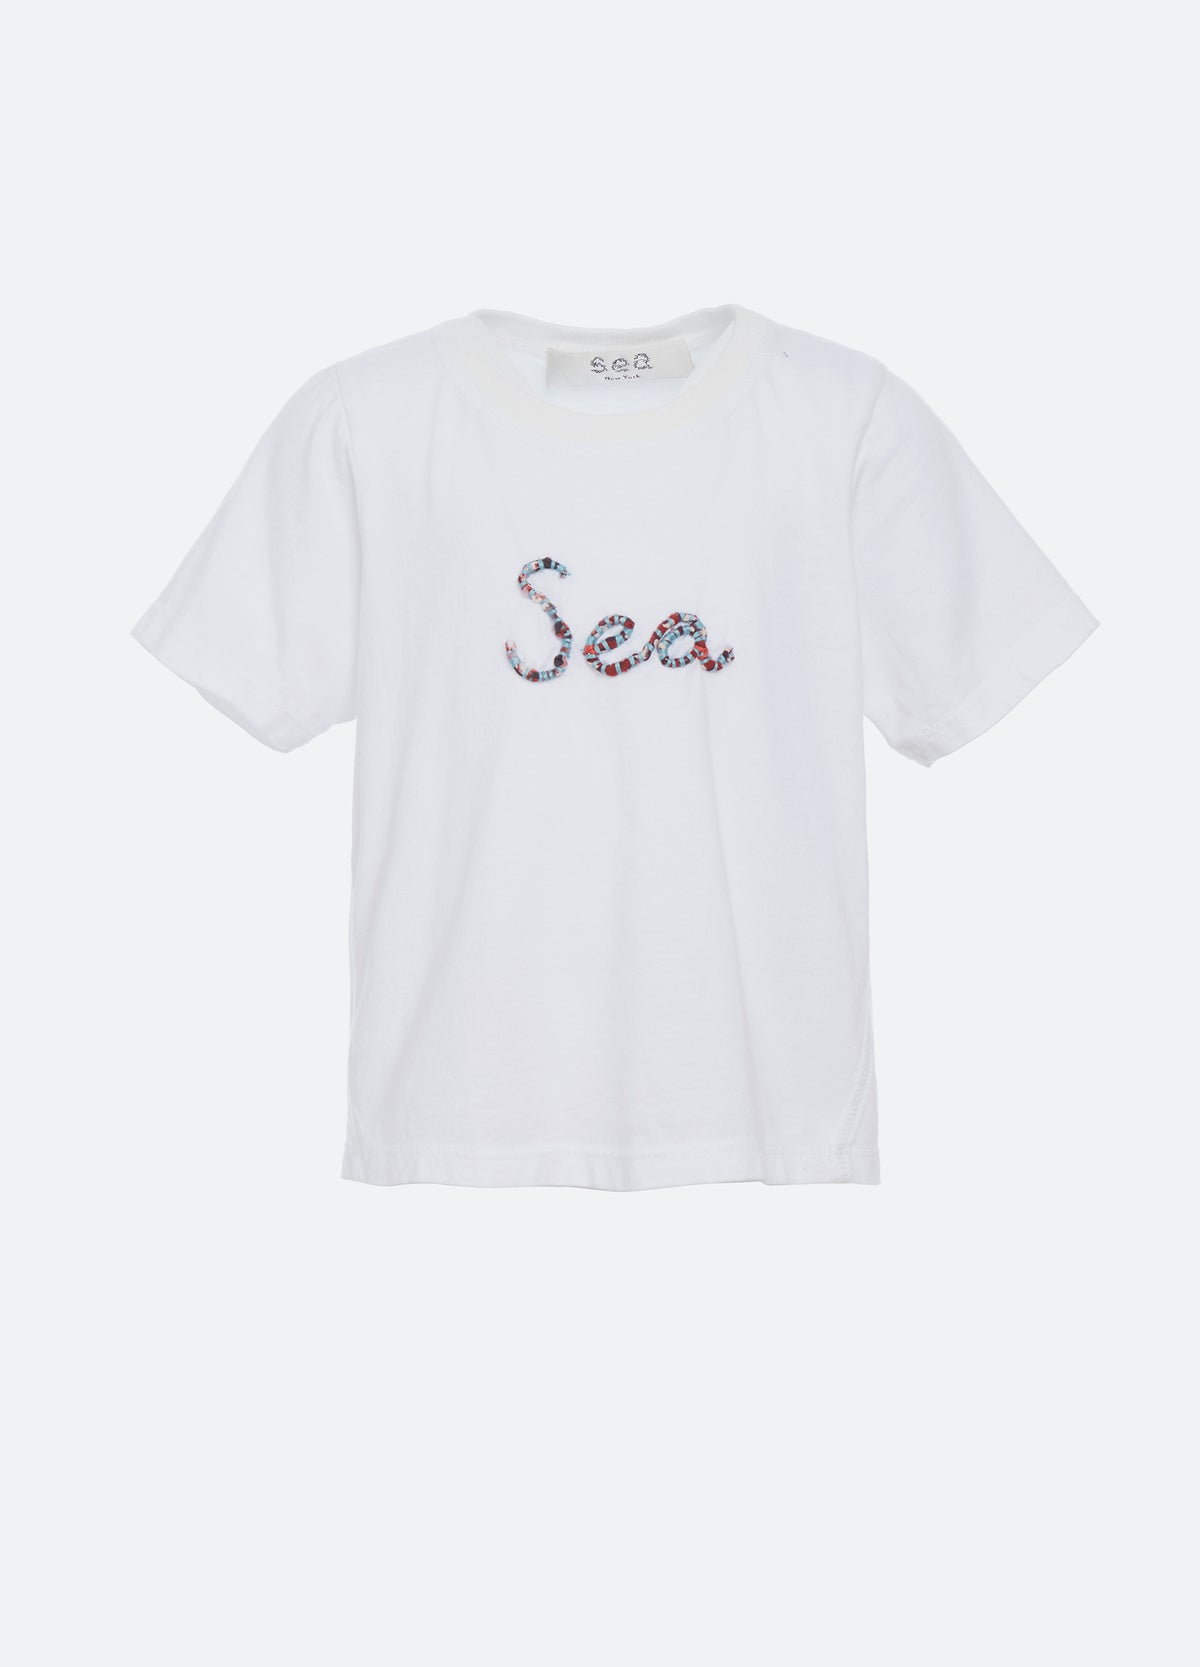 white-sea kids t-shirt-front view